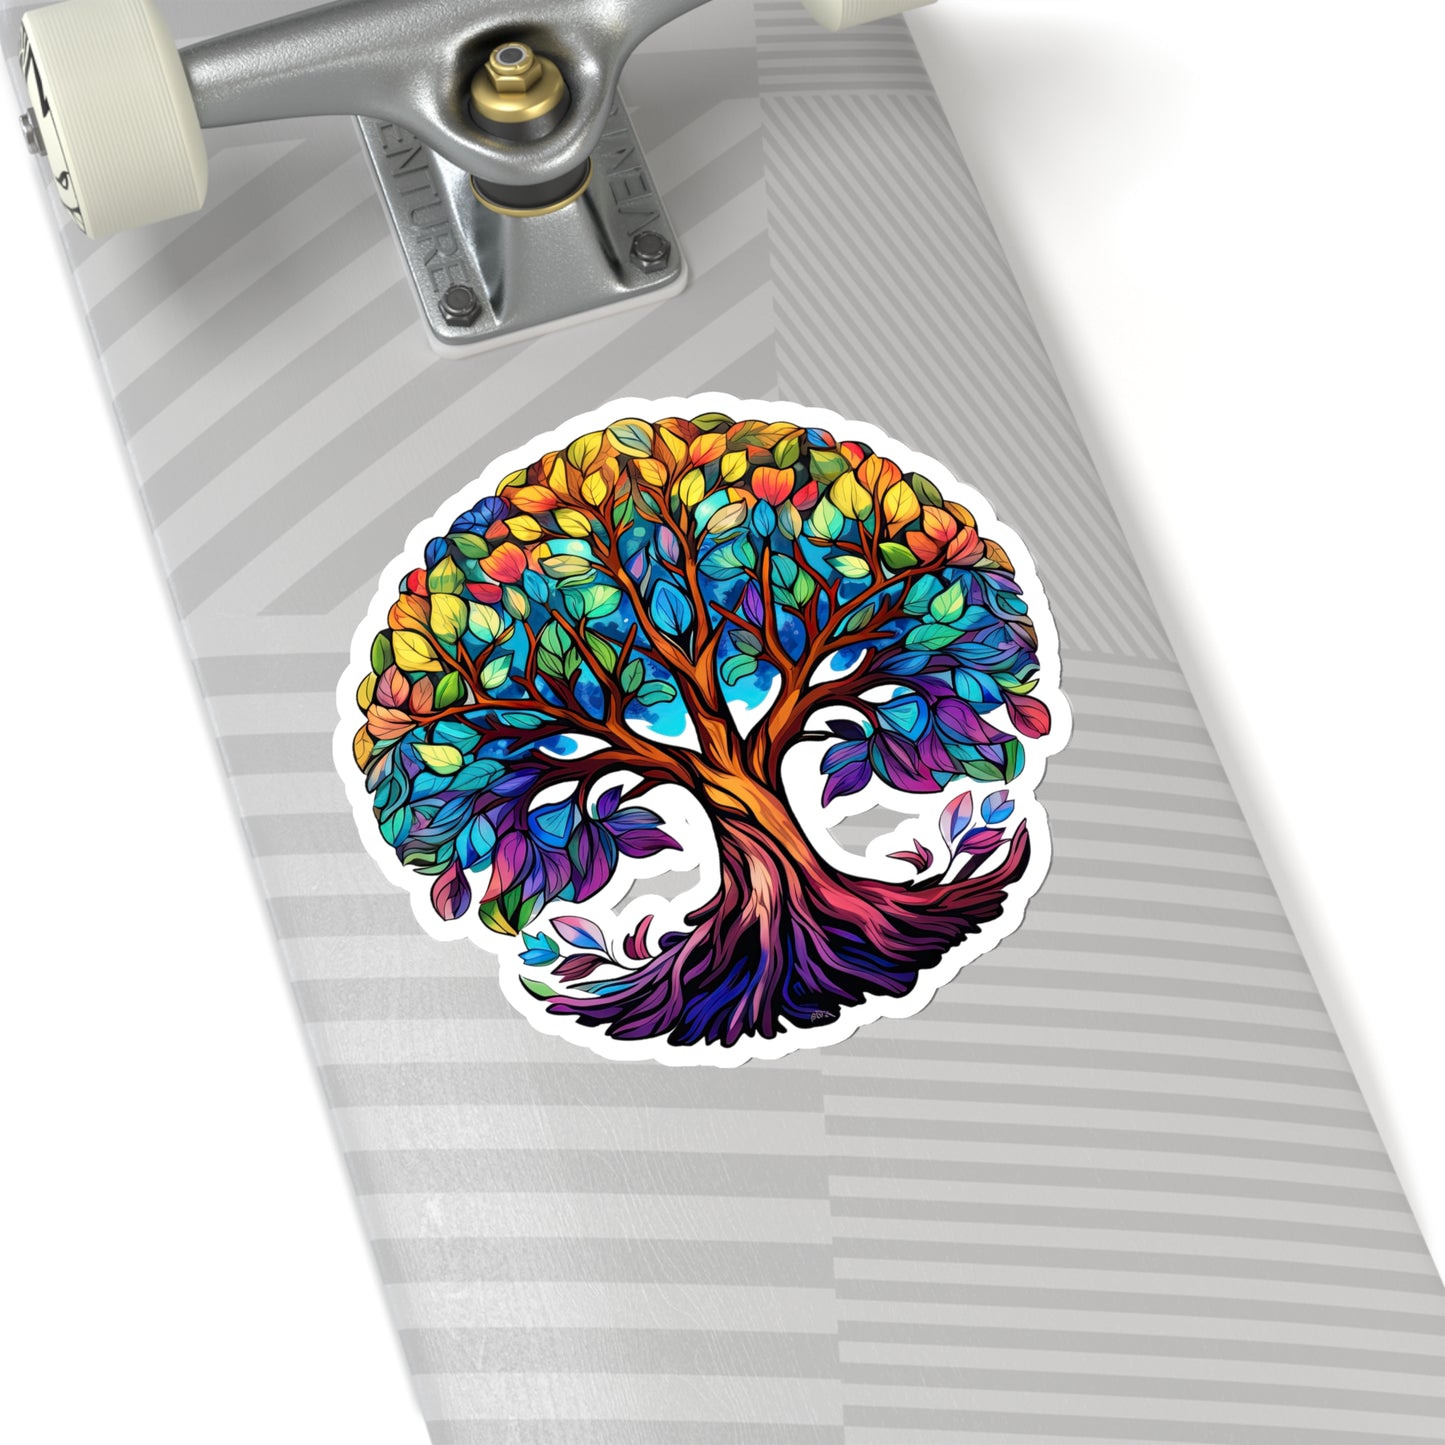 Blissful Harmony: A Lush Tree of Life Sticker